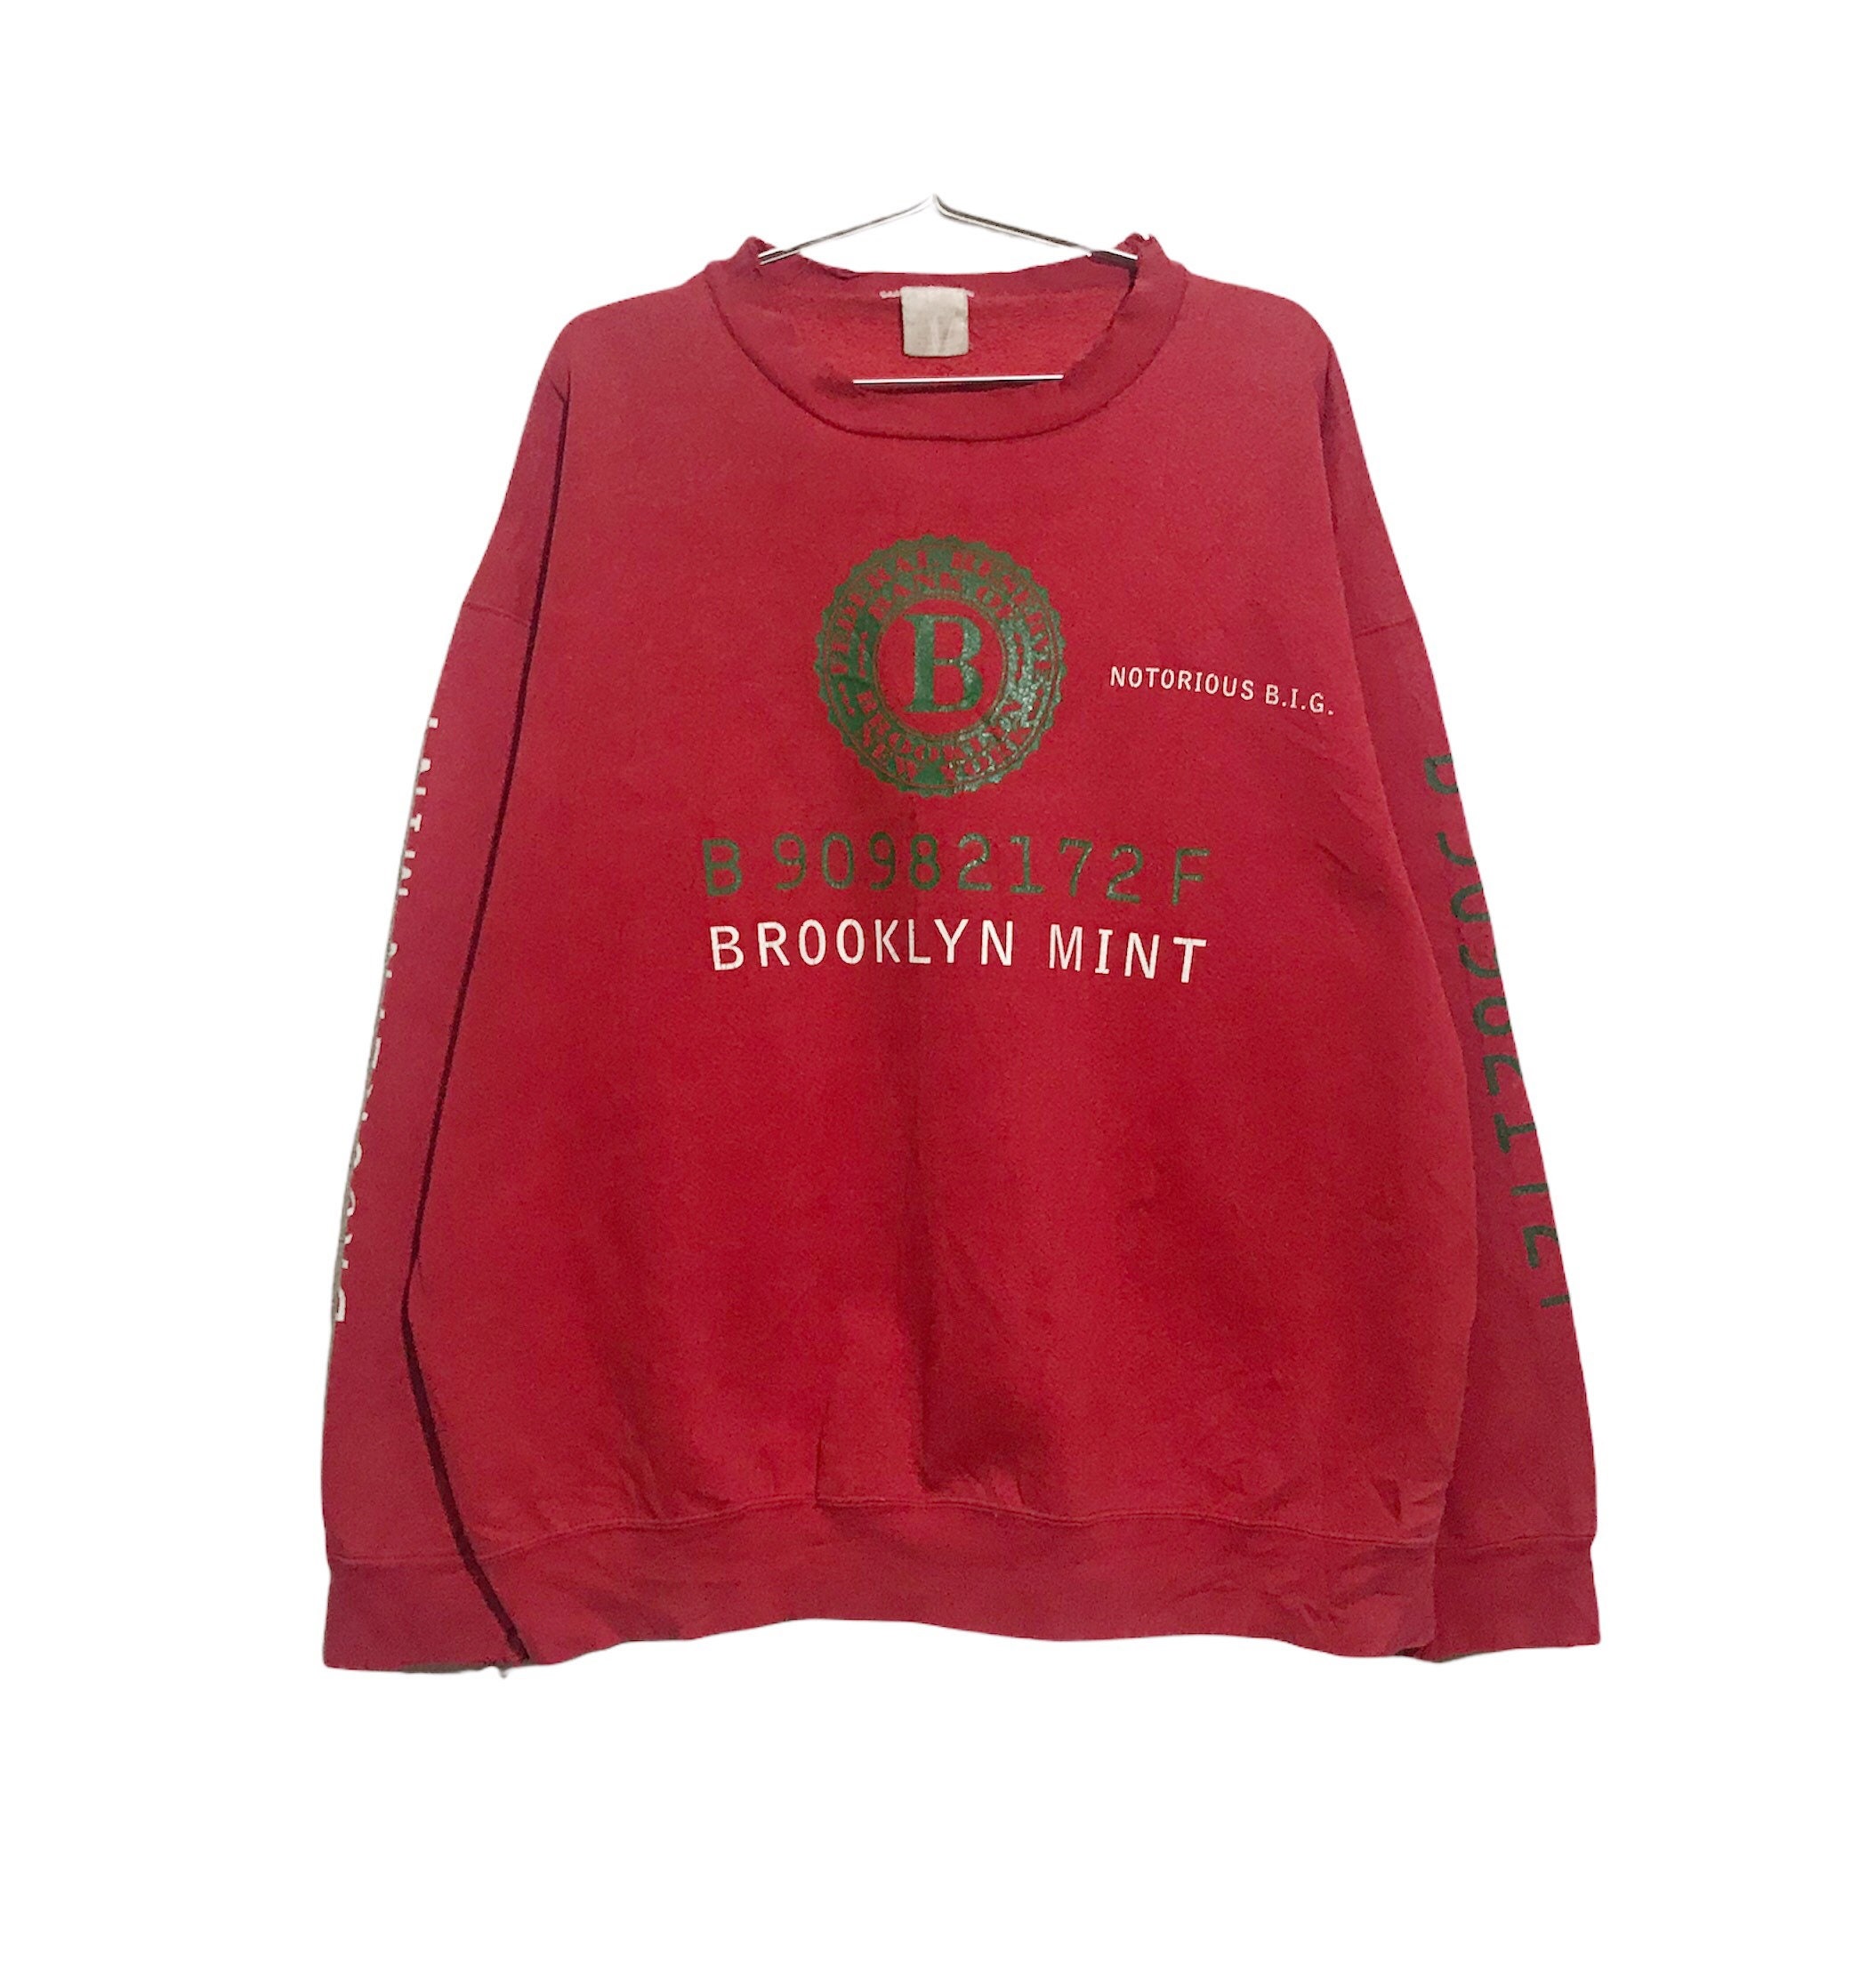 Vintage Distressed Brooklyn Mint Notorious Big Crewneck Sweatshirt Pullover  Jumper XL Size 